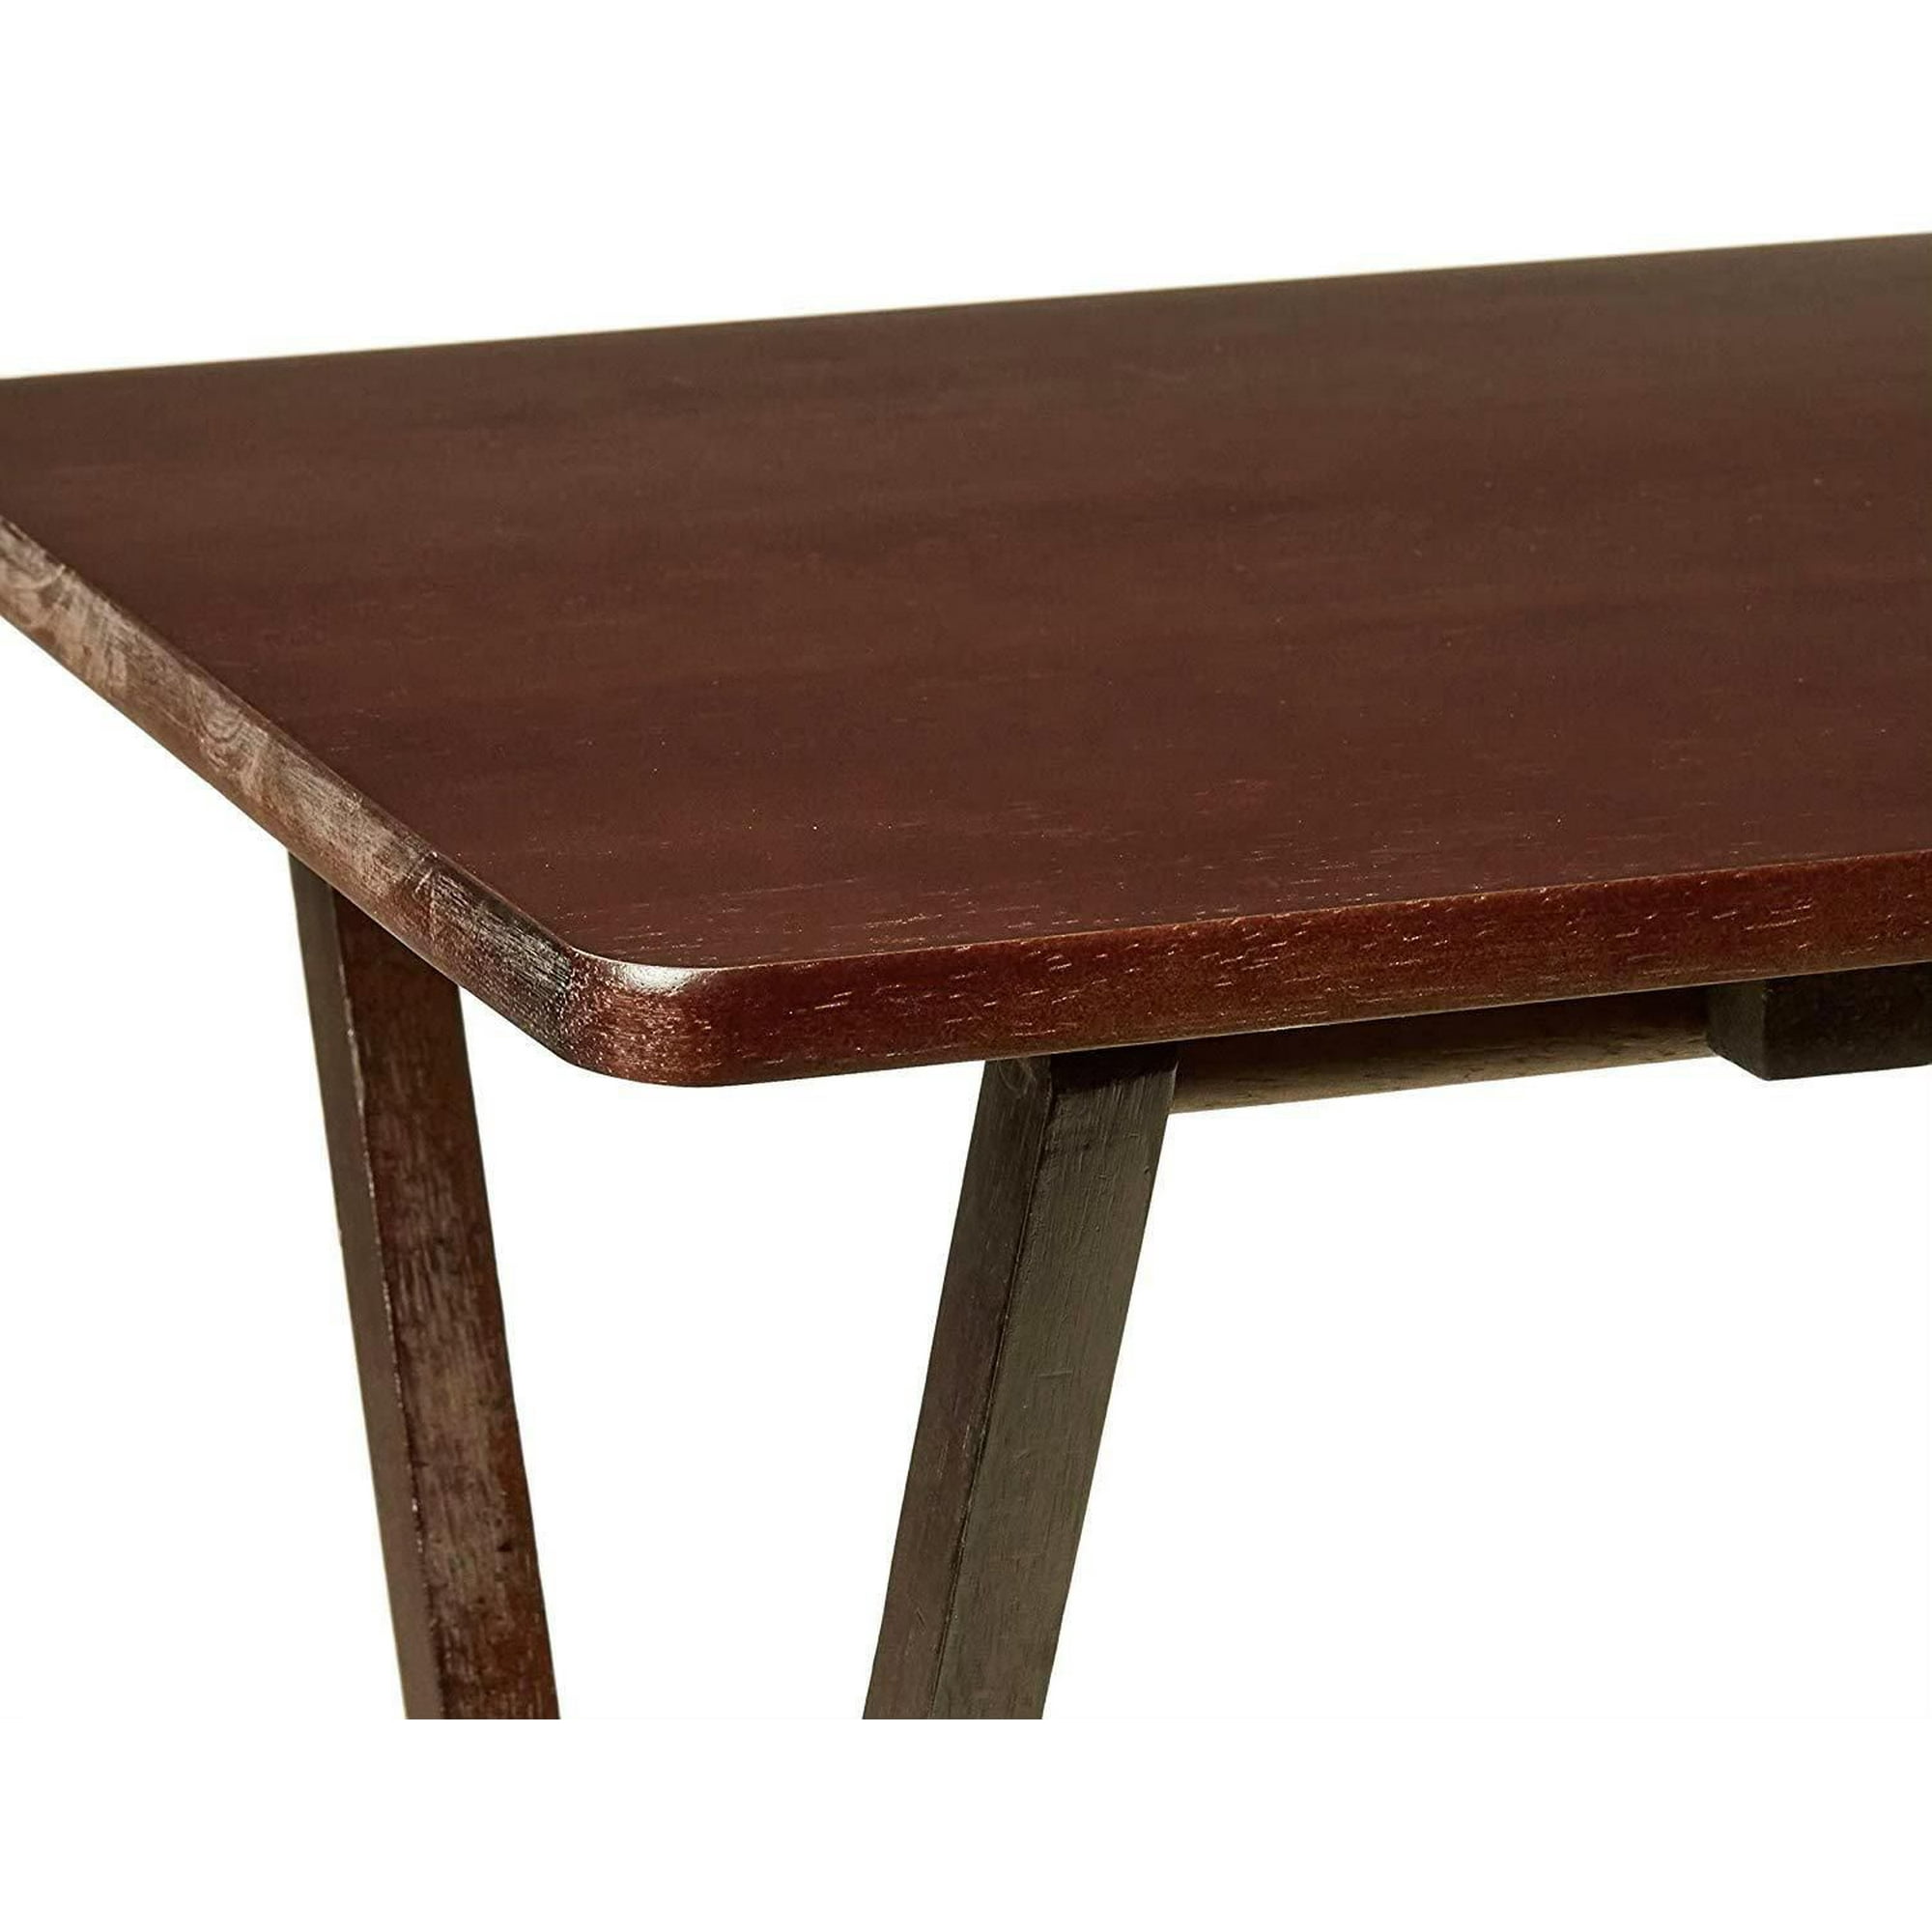 Single Tray Table - Walnut, Solid wood construction 